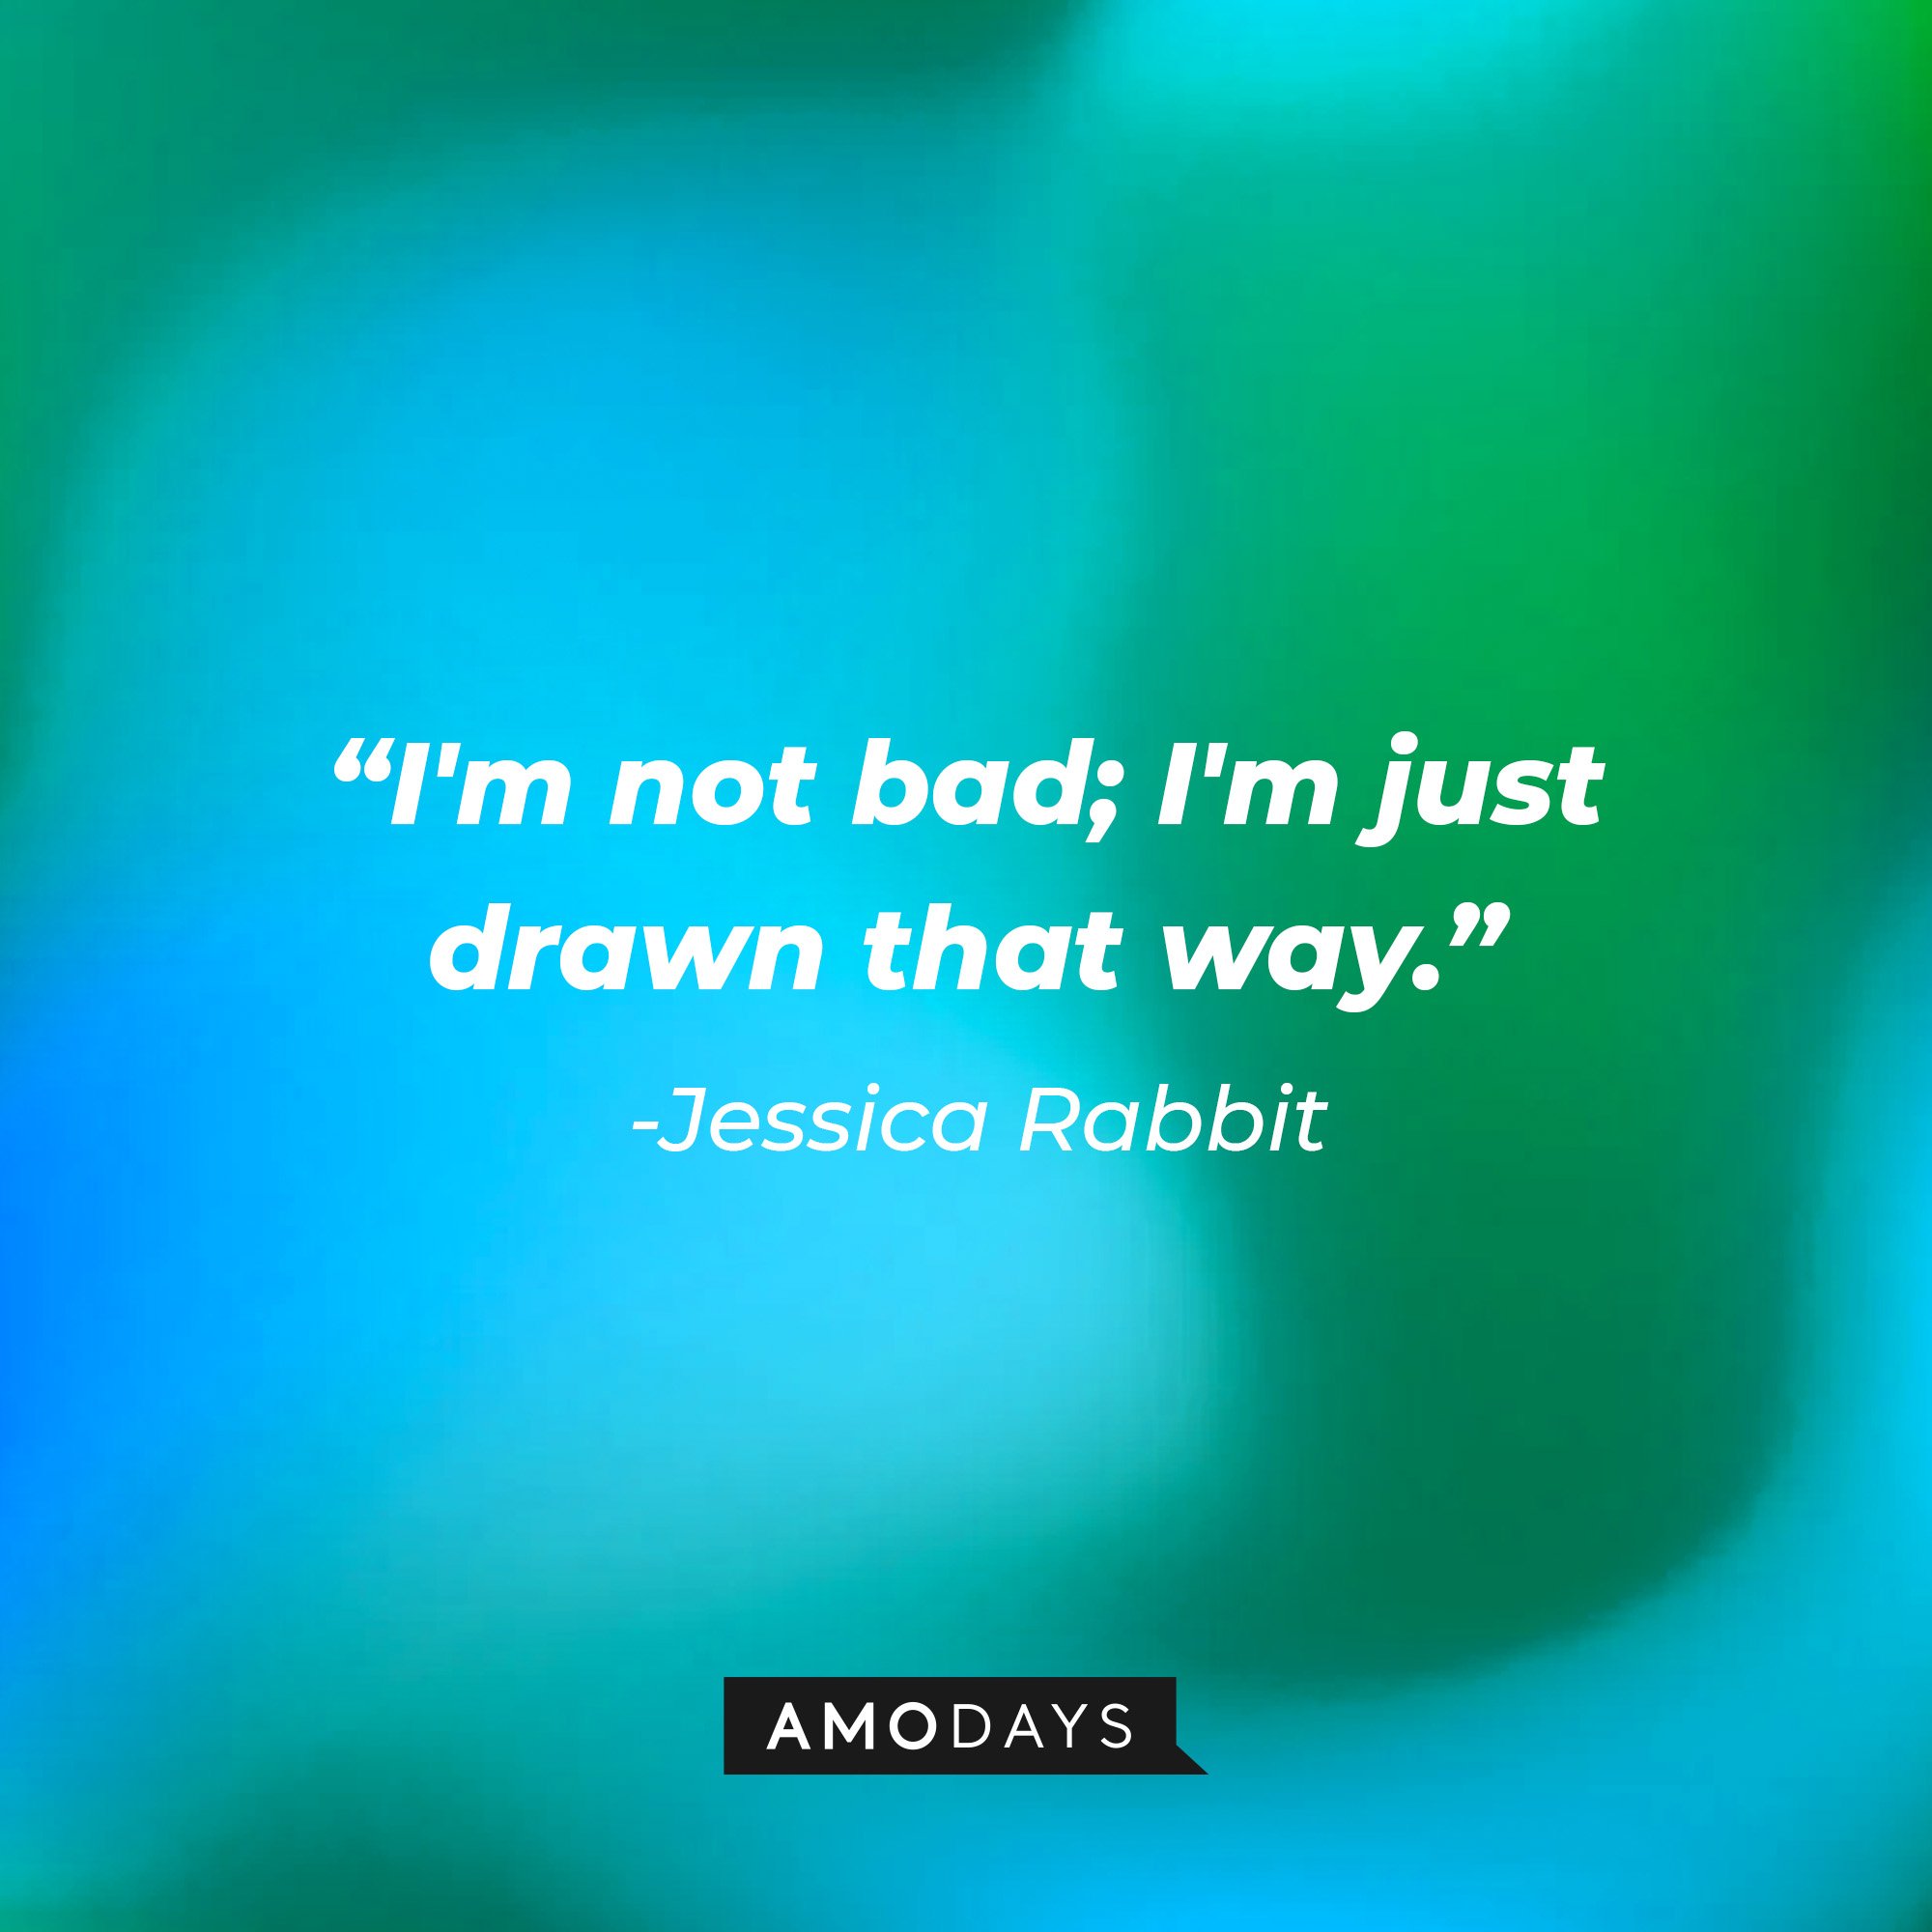 Jessica Rabbit’s quote: "I'm not bad; I'm just drawn that way." | Image: AmoDays